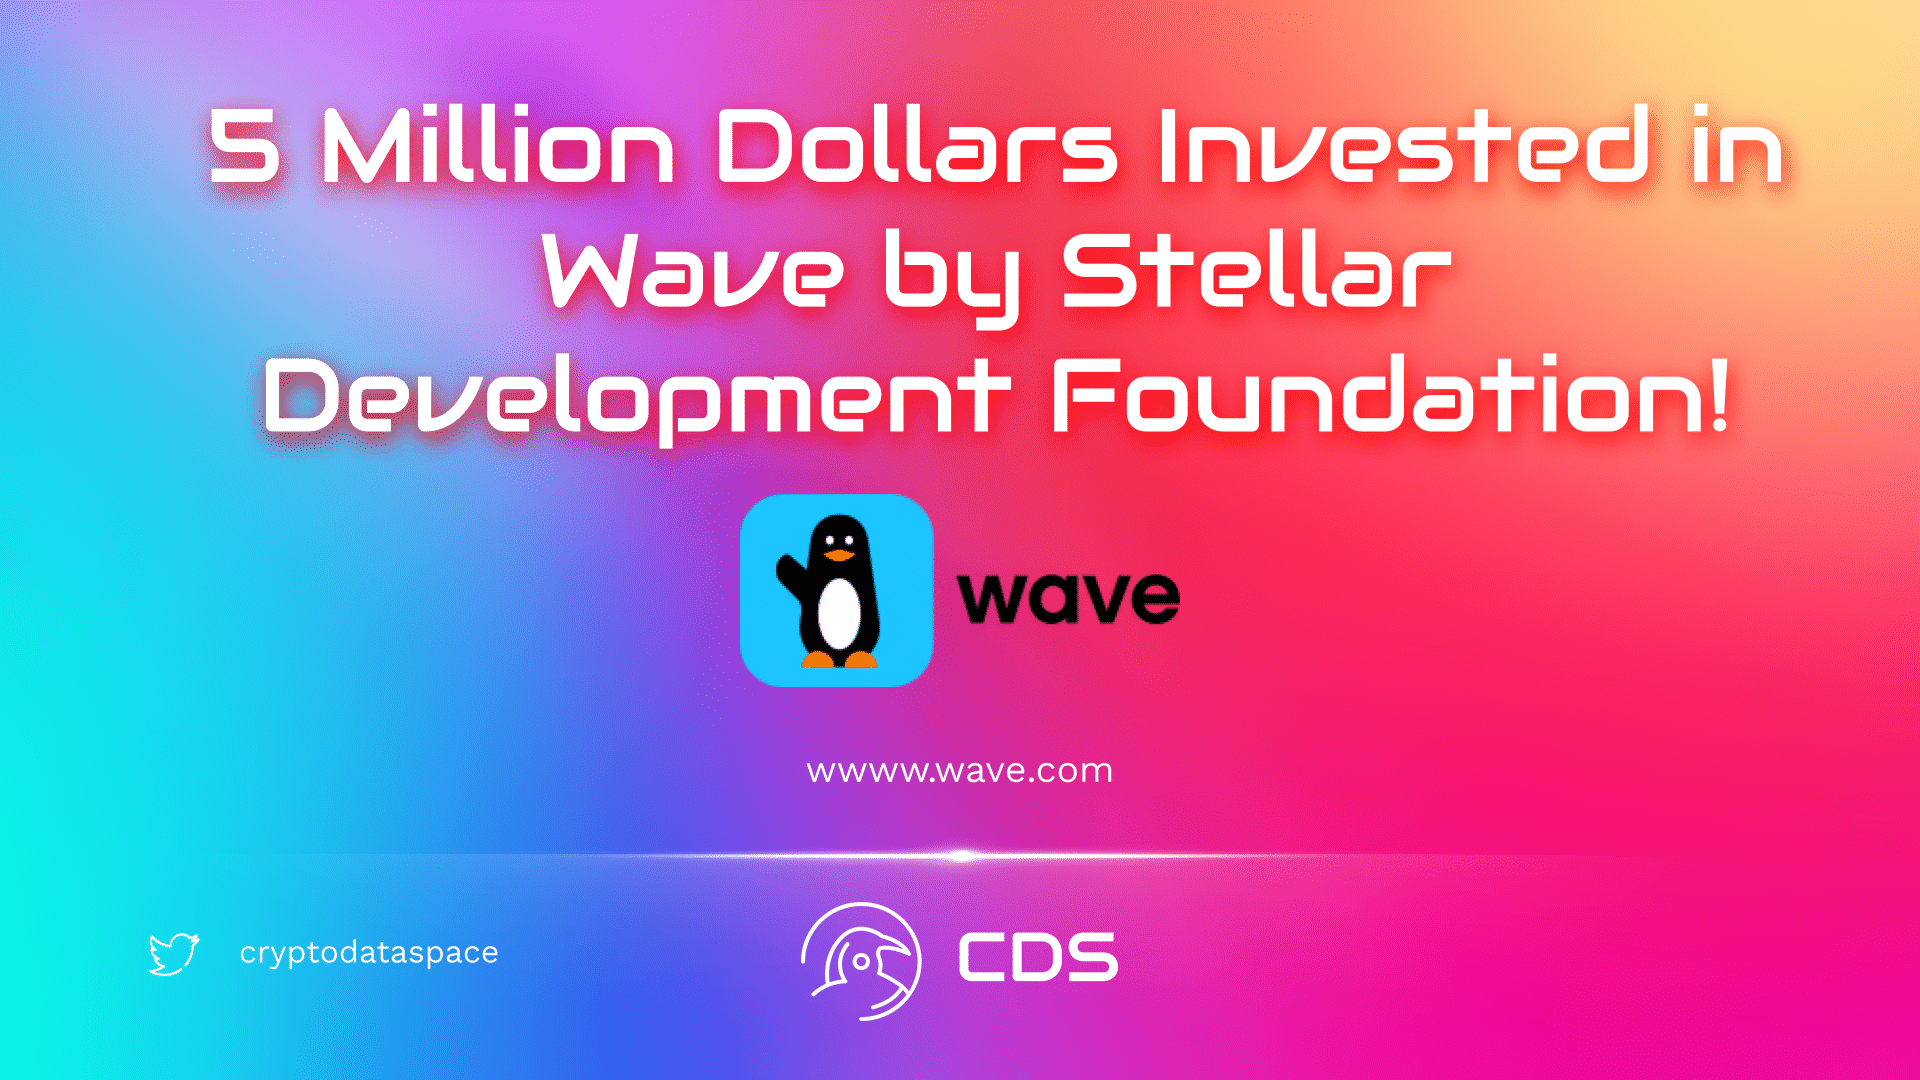 5 Million Dollars Invested in Wave by Stellar Development Foundation!